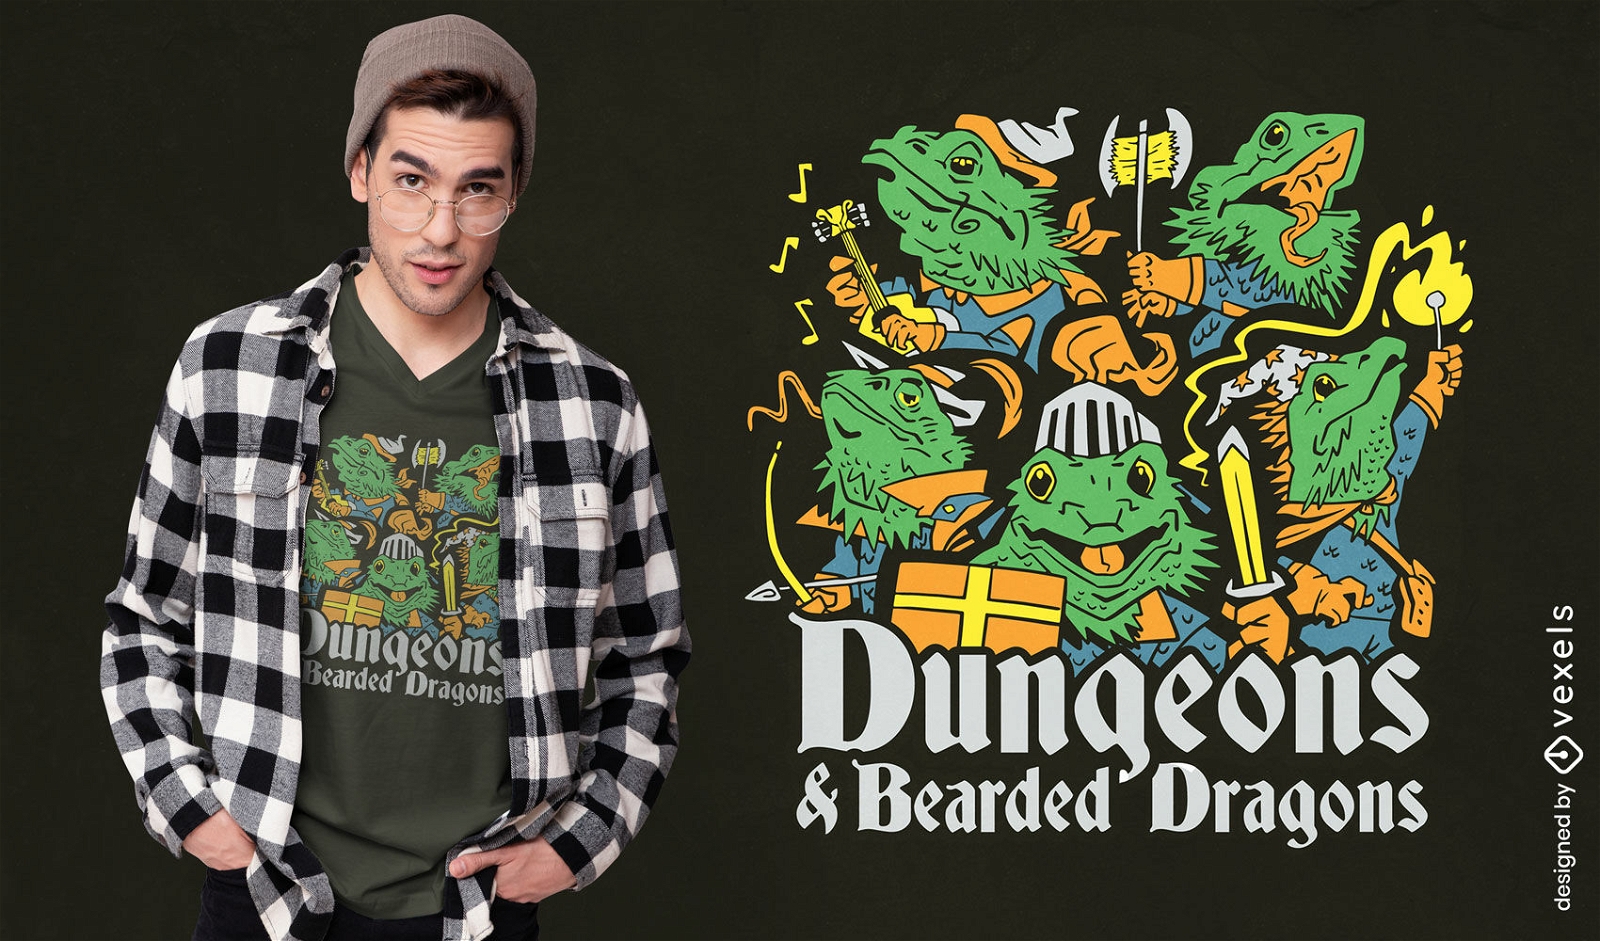 Bearded dragons fantasy t-shirt design